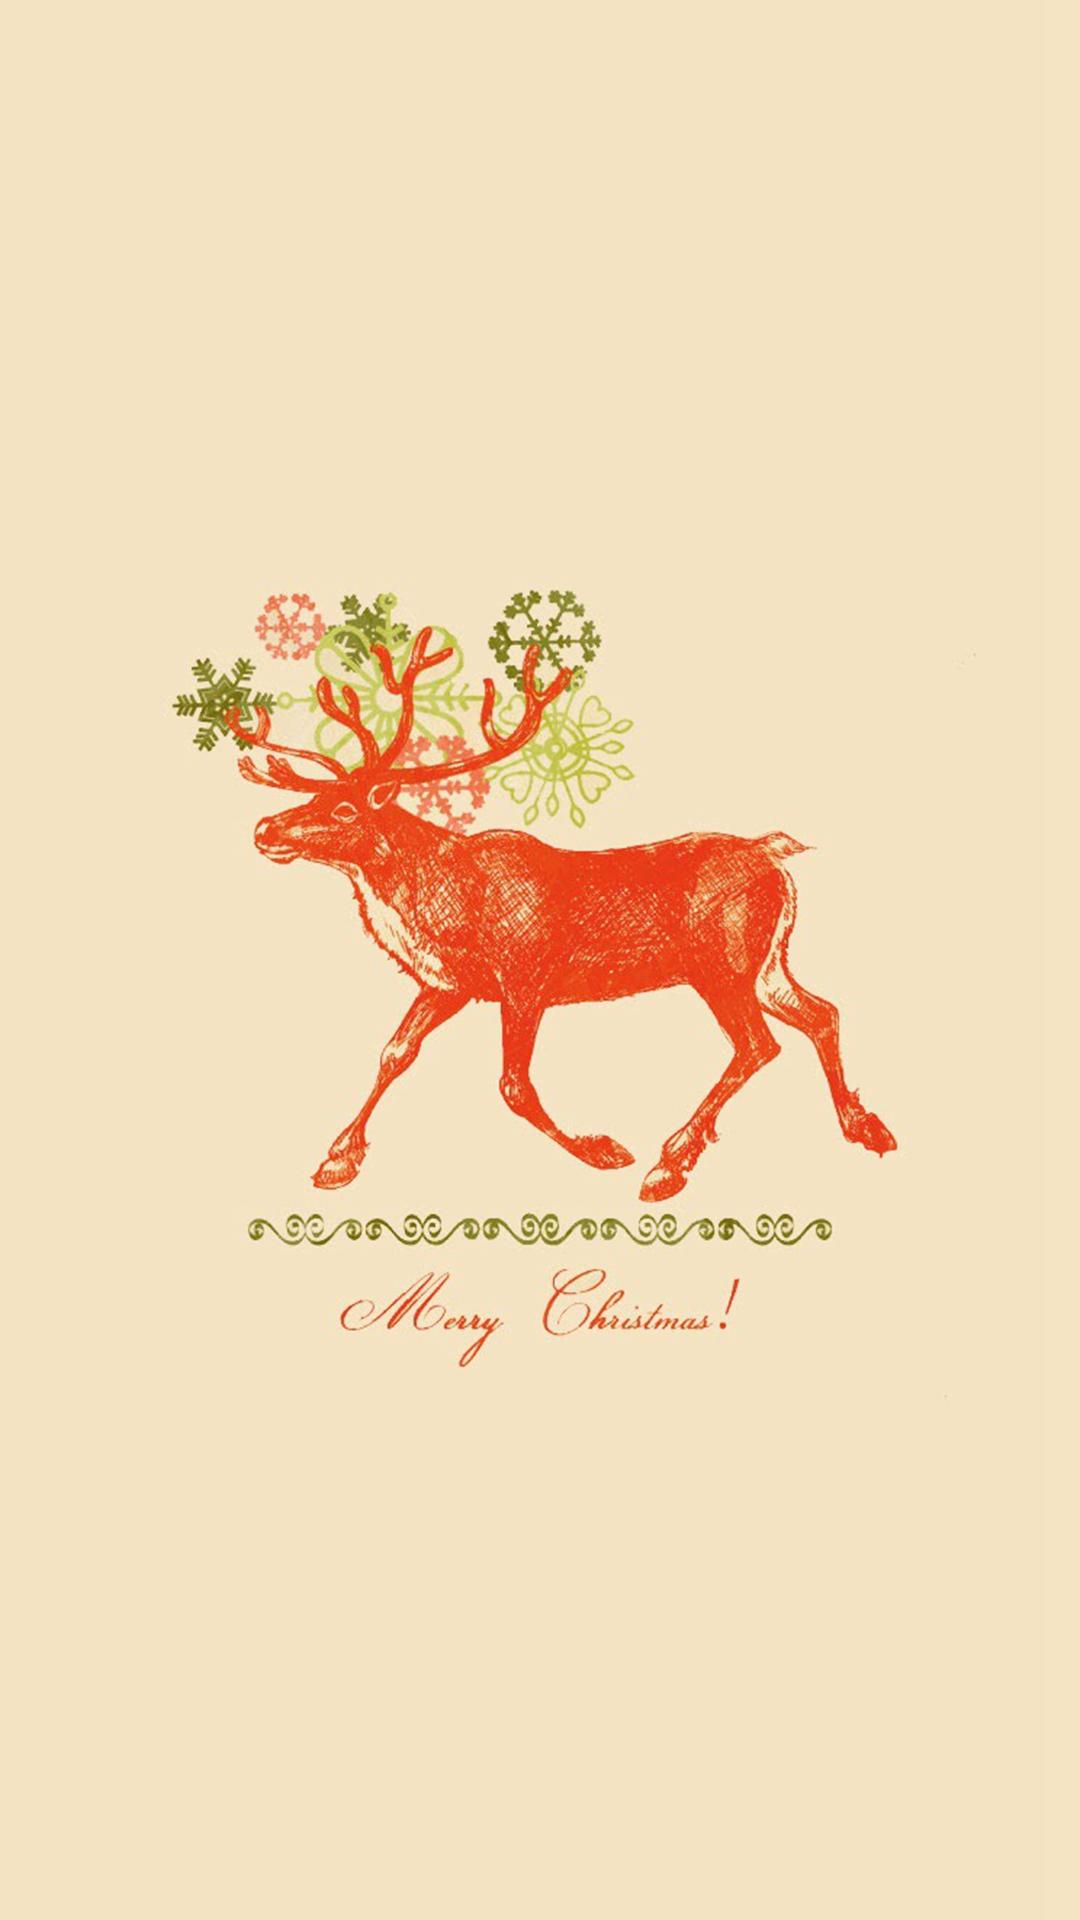 Merry Christmas Vintage Reindeer Illustration iPhone 8 Wallpaper Free Download